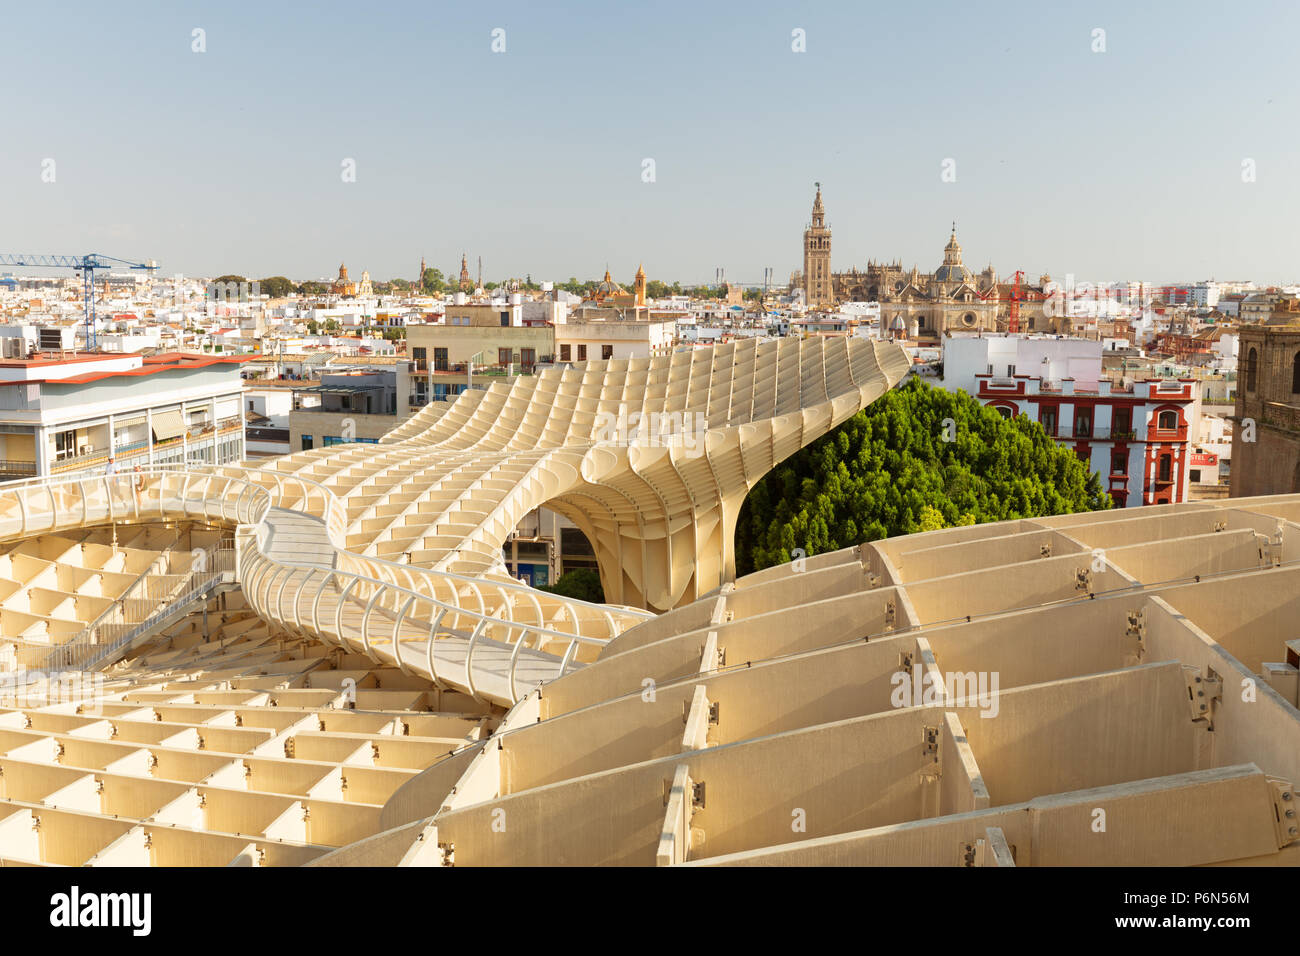 Sevilla, Panorama view from the top of the Space Metropol Parasol (Setas de  Sevilla Stock Photo - Alamy